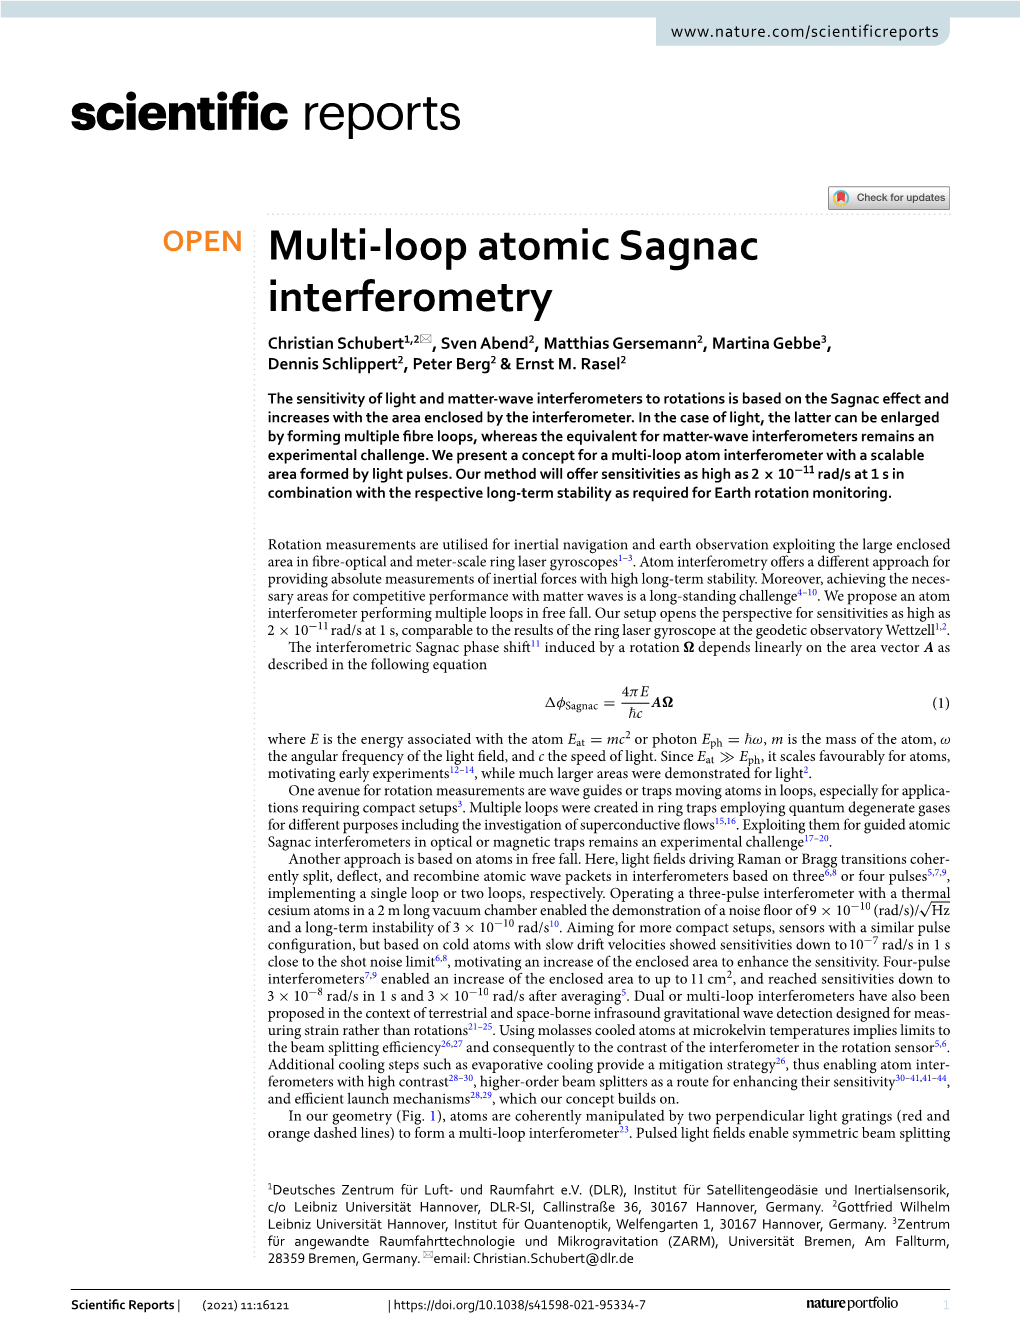 Multi-Loop Atomic Sagnac Interferometry